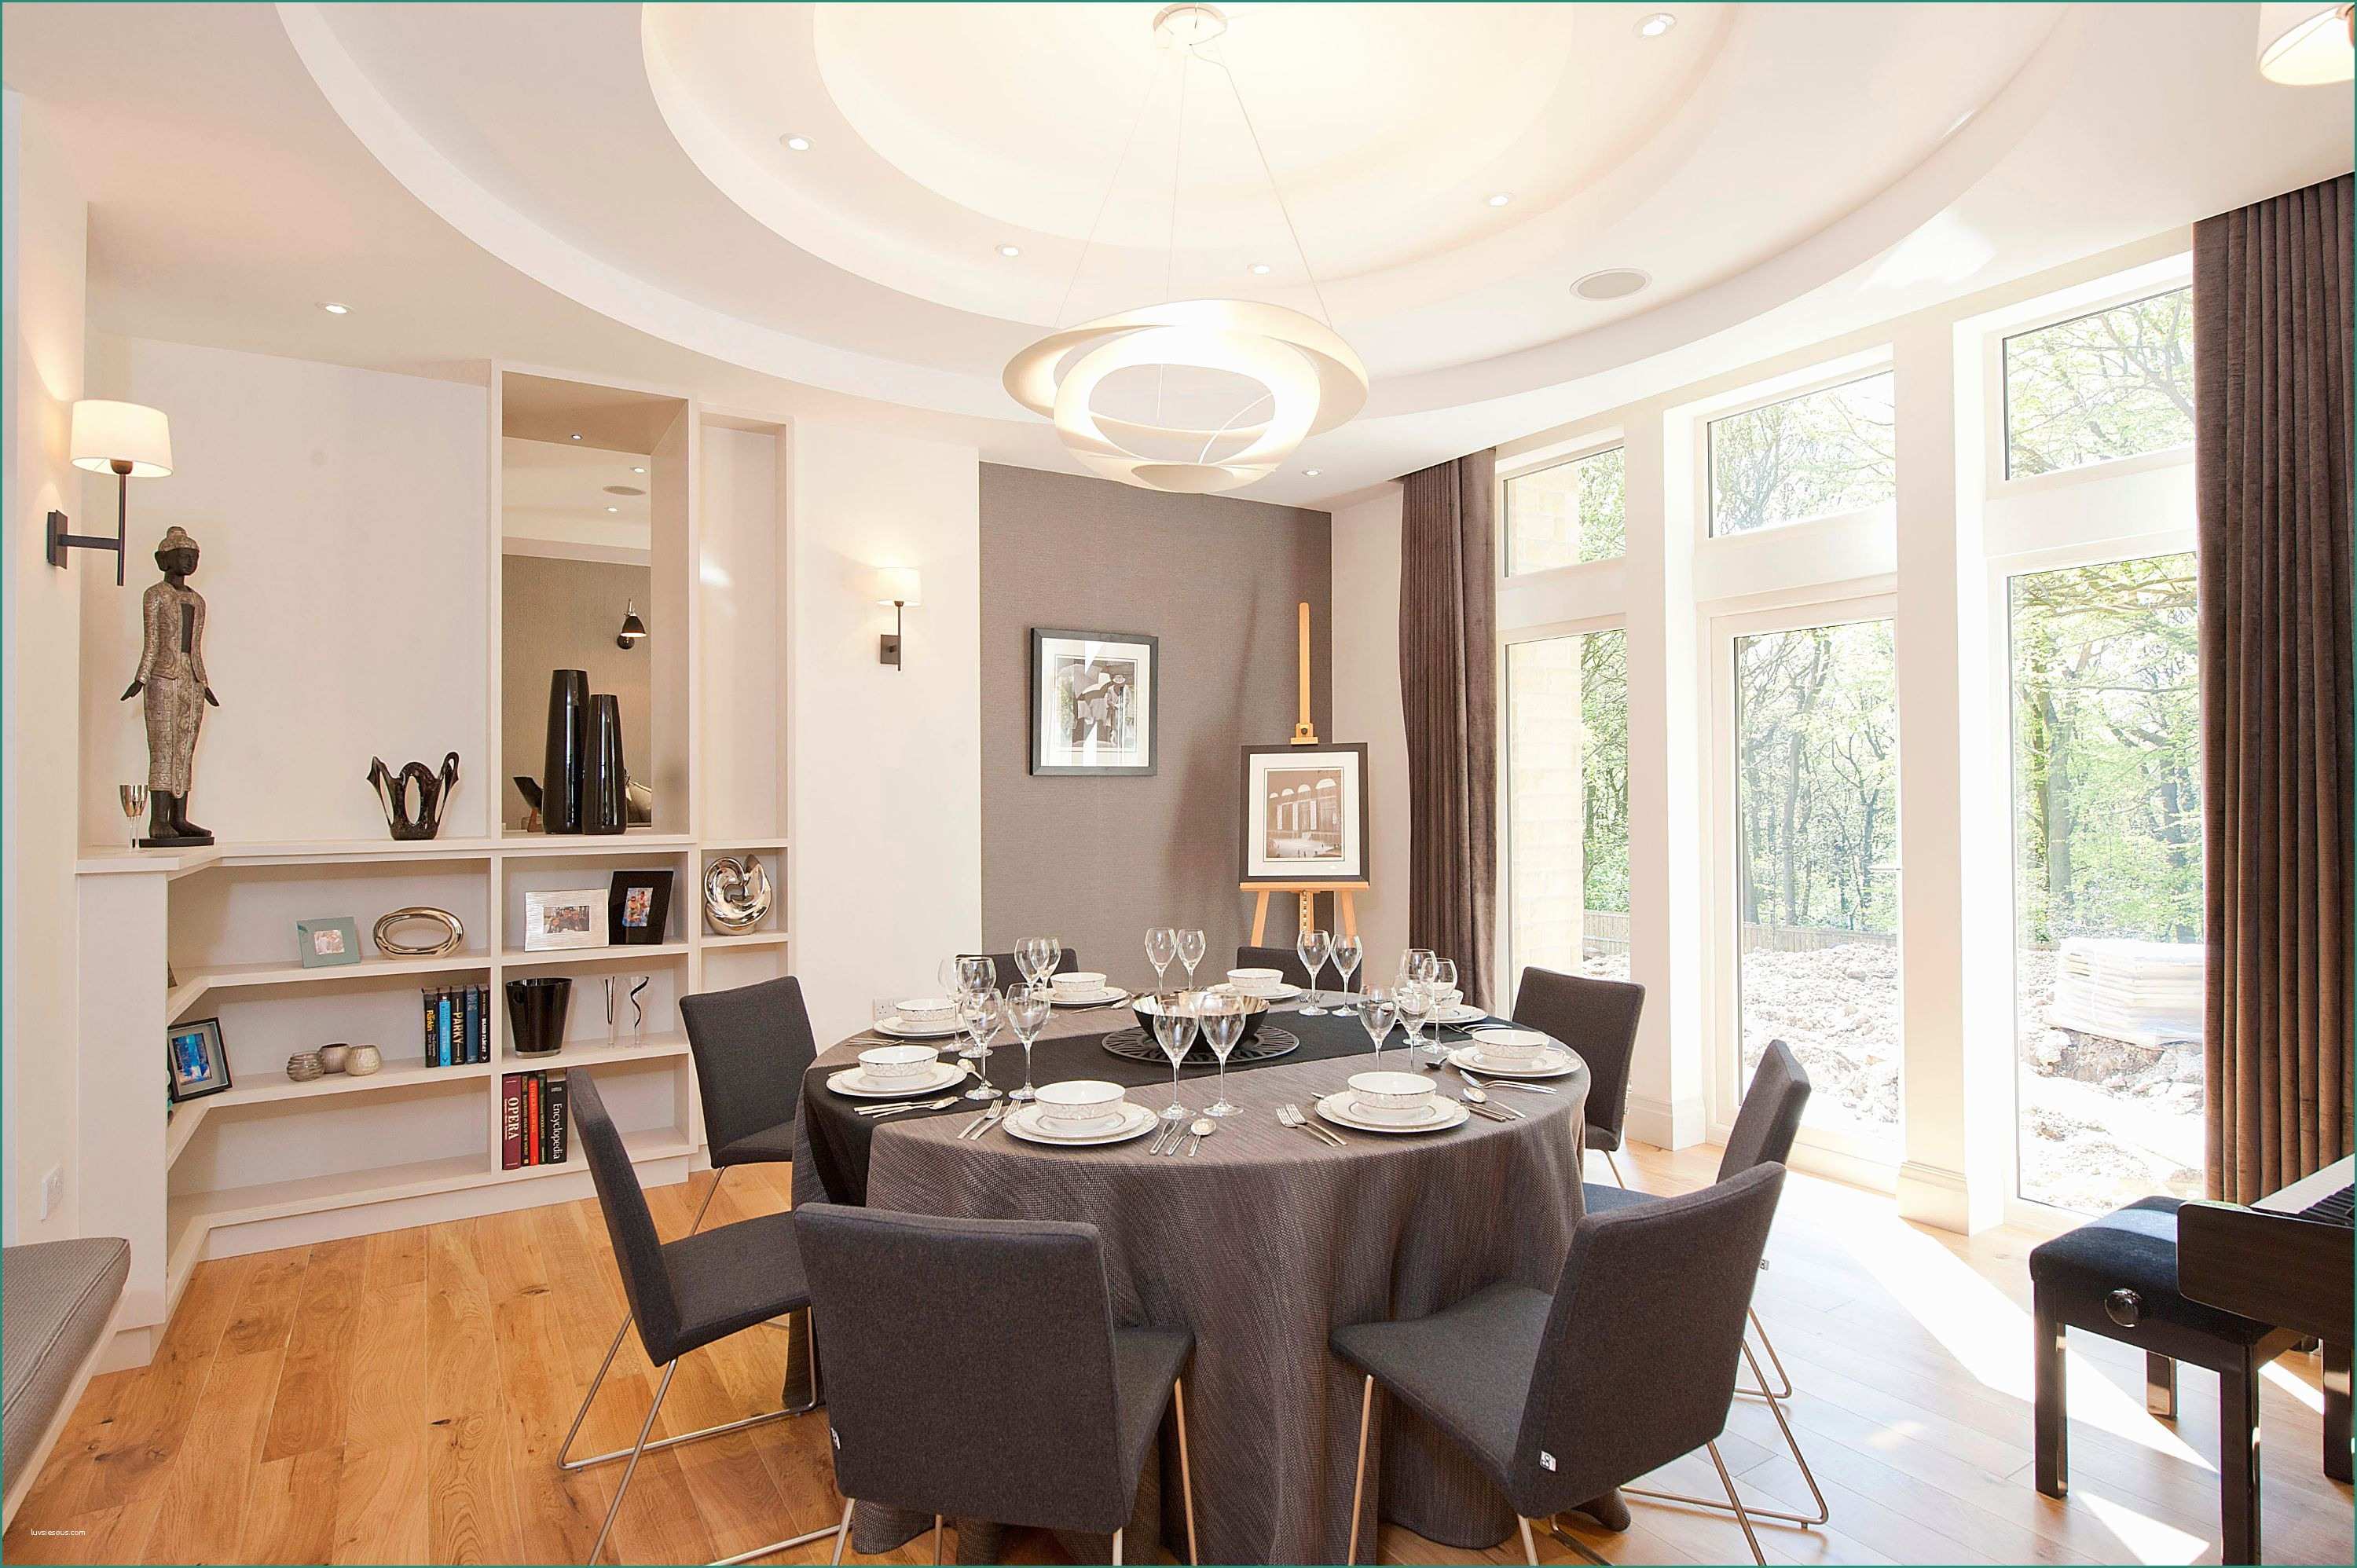 Lampada Arco Flos E Dining Room by E 17 Circular Profiled Ceiling Circular Dining